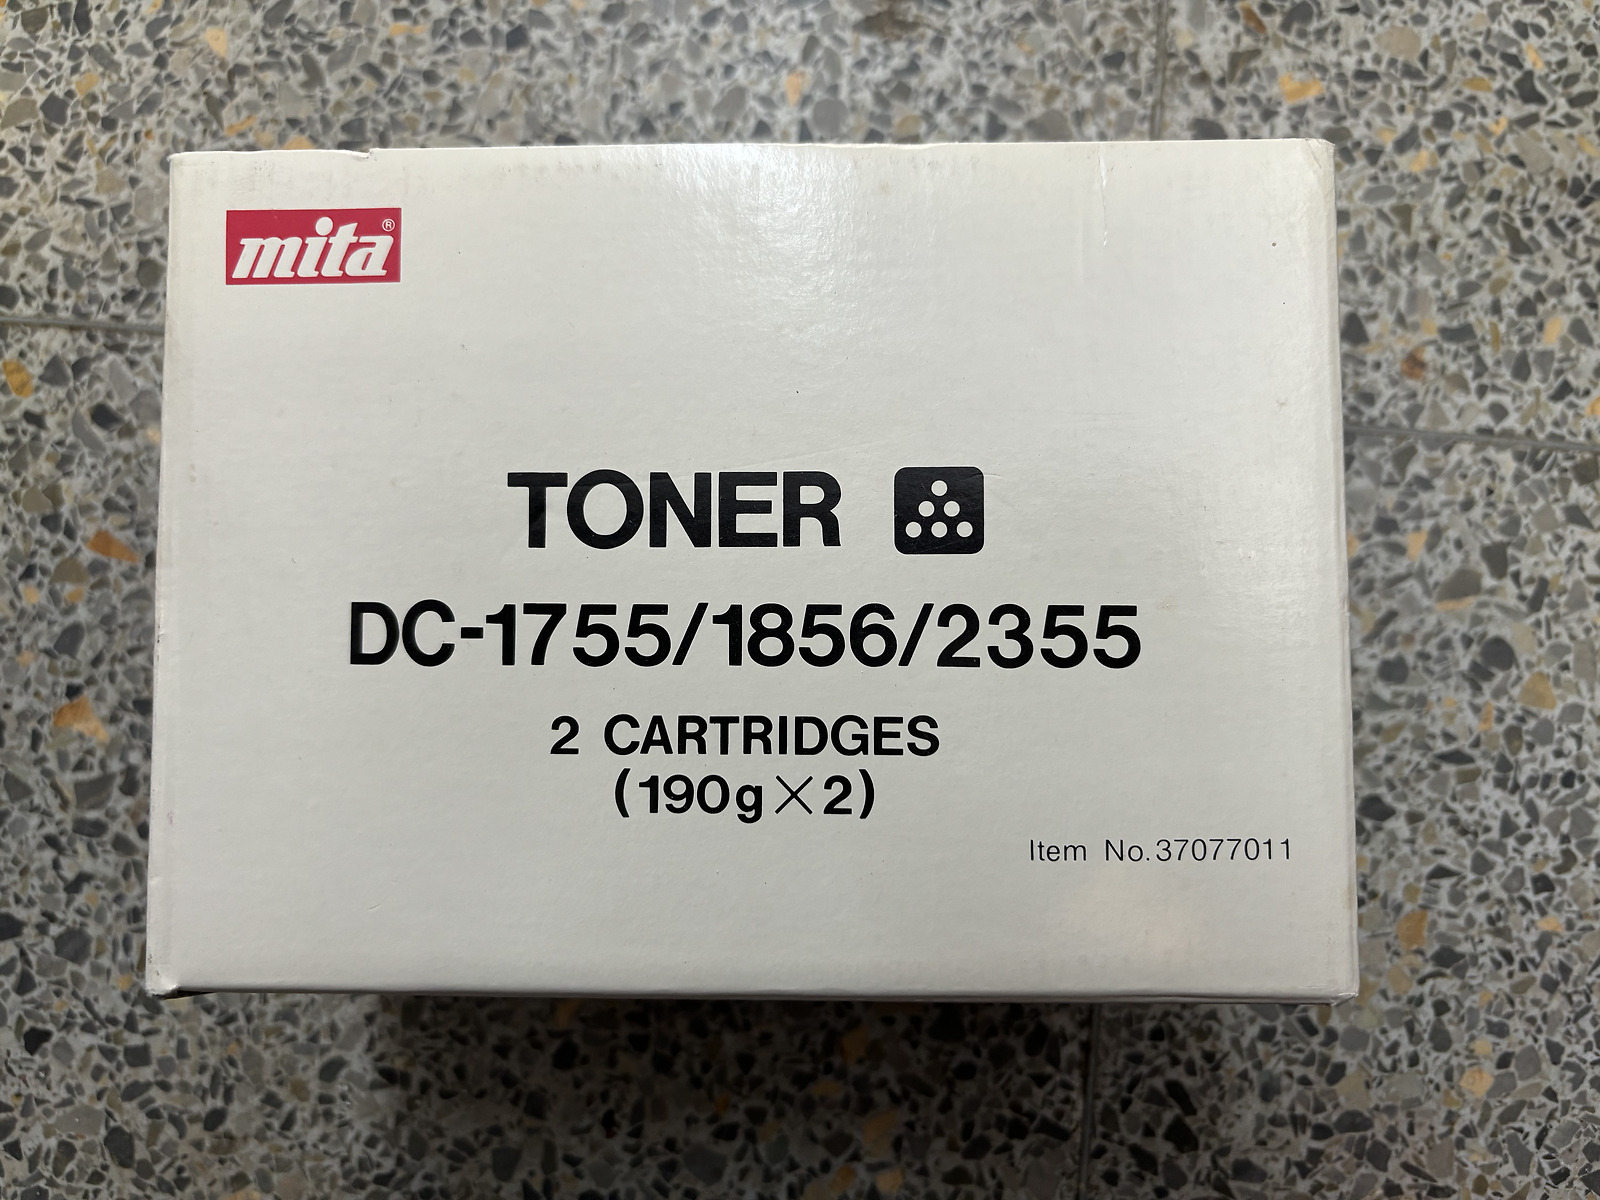 Mita Toner DC-1755/1856/2355 - 2 Cartridges